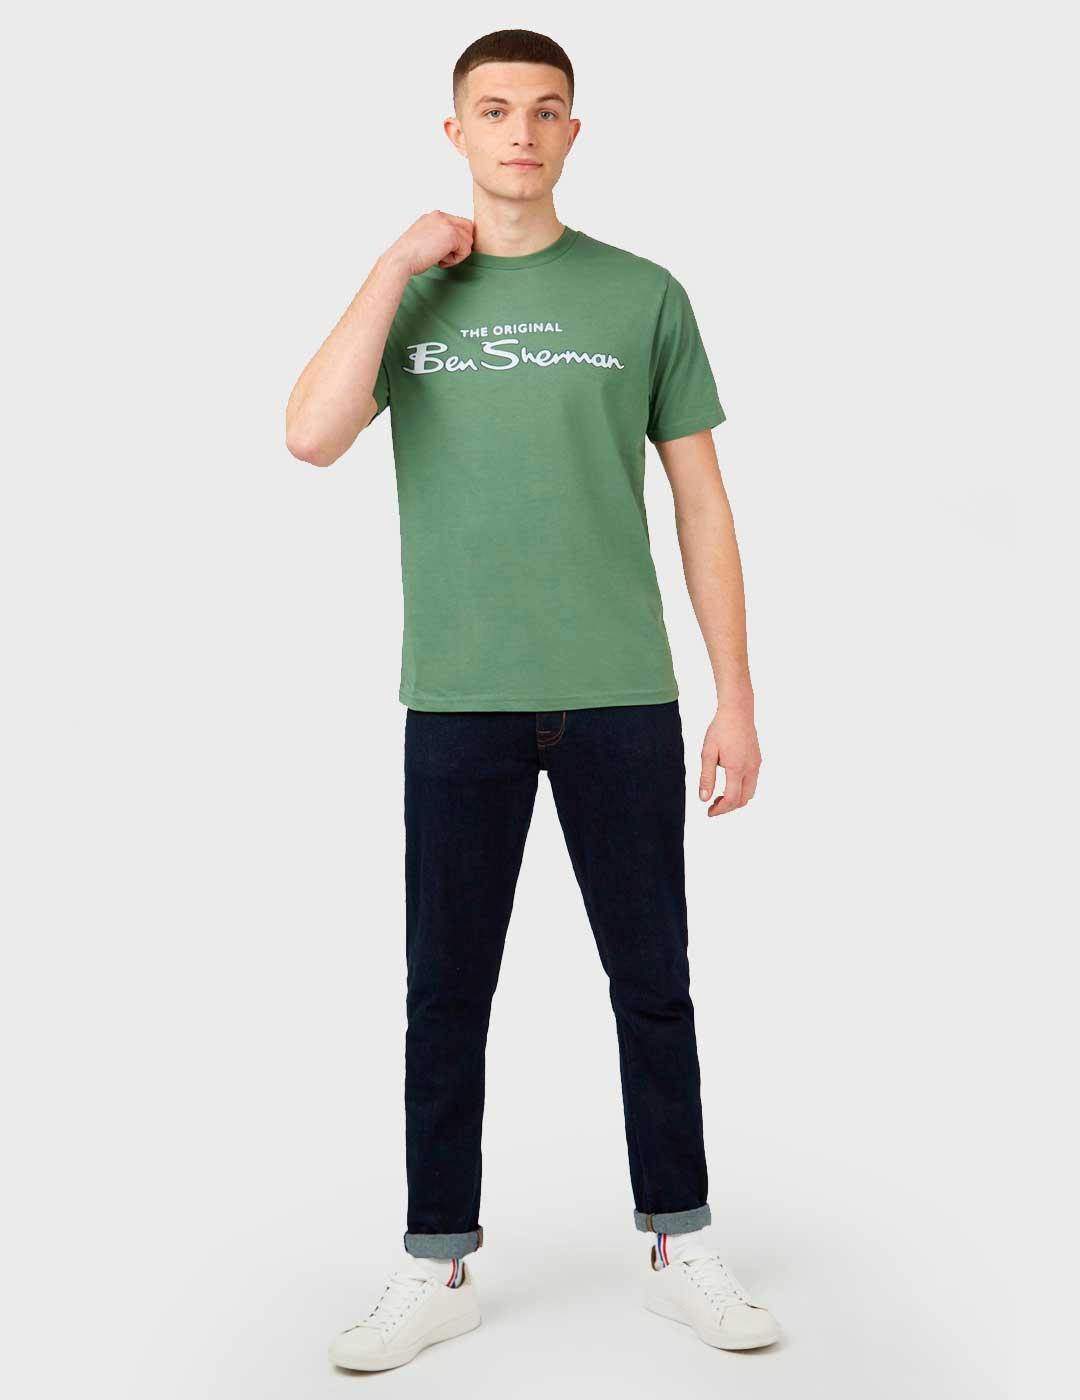 Camiseta Ben Sherman Signature Flock verde para hombre